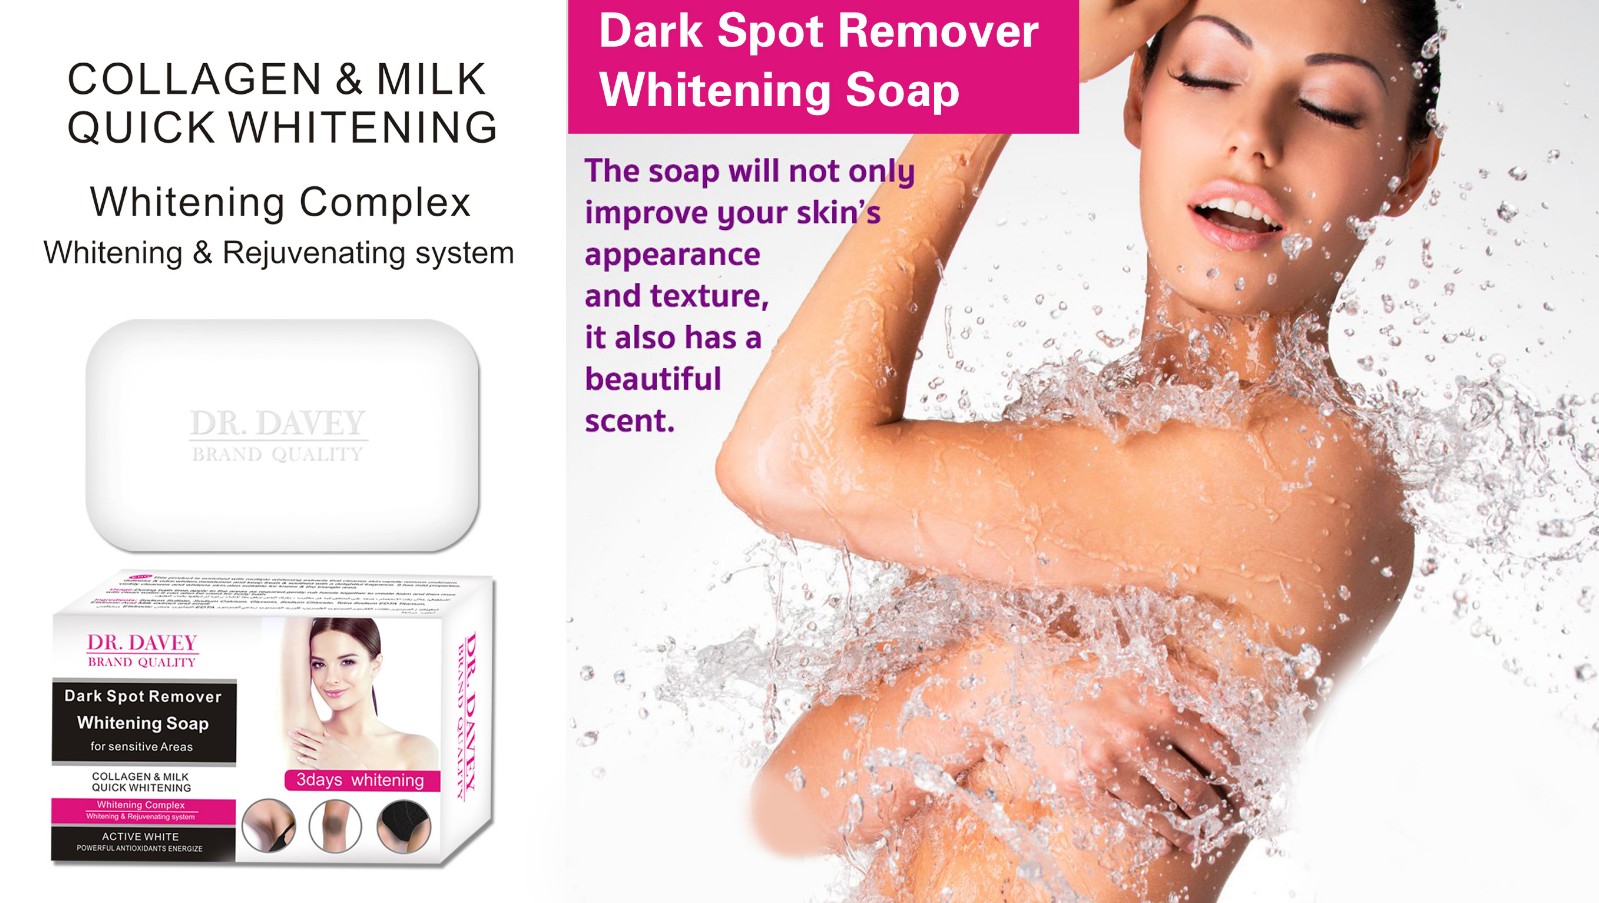 Dark Spot Remover Whitening Soap